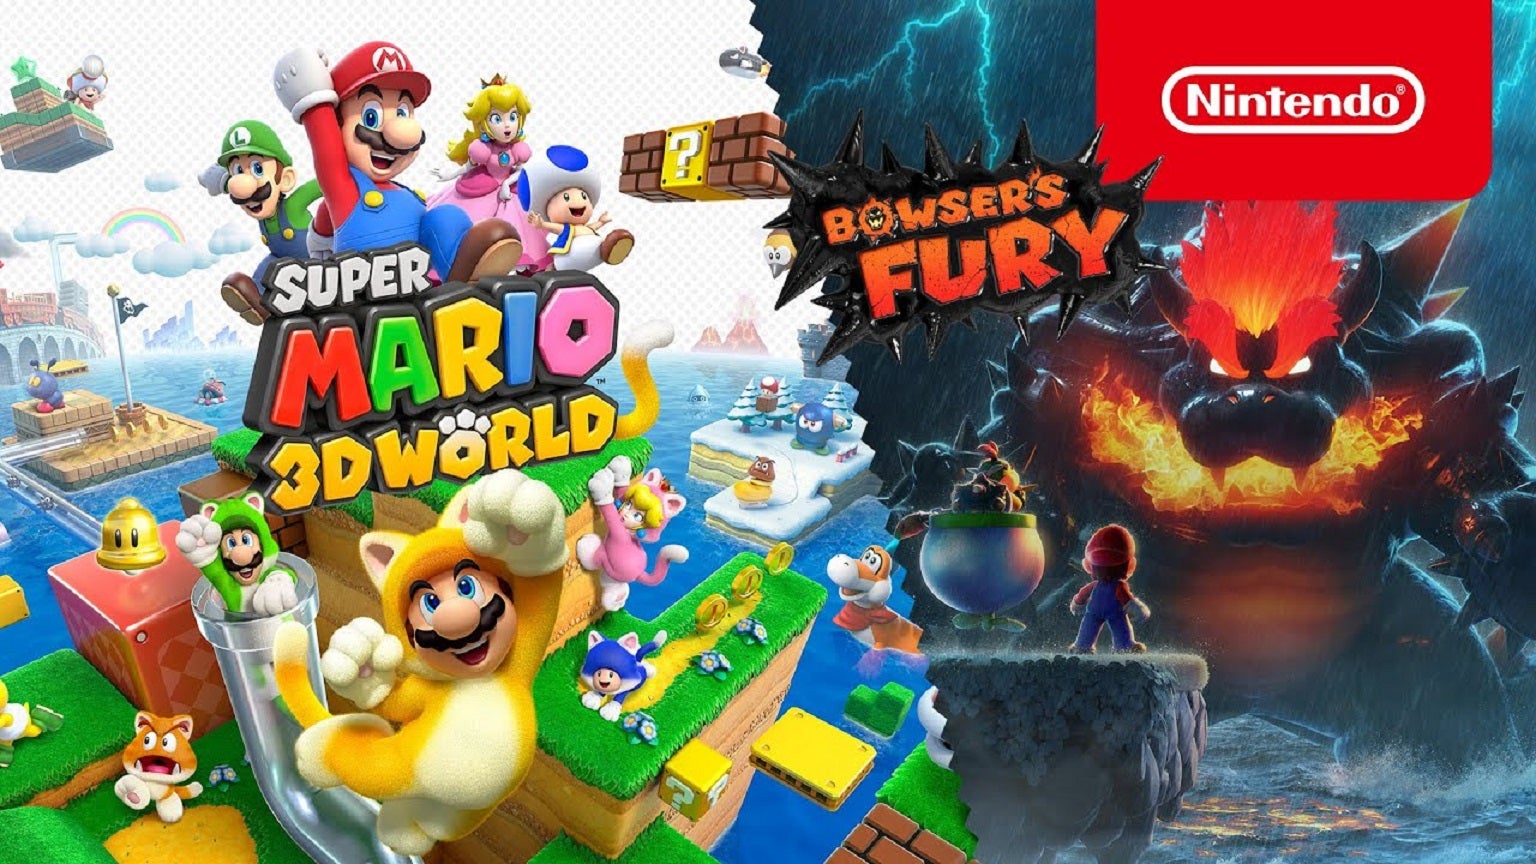 Super mario bowser fury. Марио 3д ворлд на Нинтендо свитч. Super Mario 3d Nintendo Switch. Super Mario 3d World Bowser's Fury Nintendo Switch. Super Mario 3 d World Bowser s Fury.